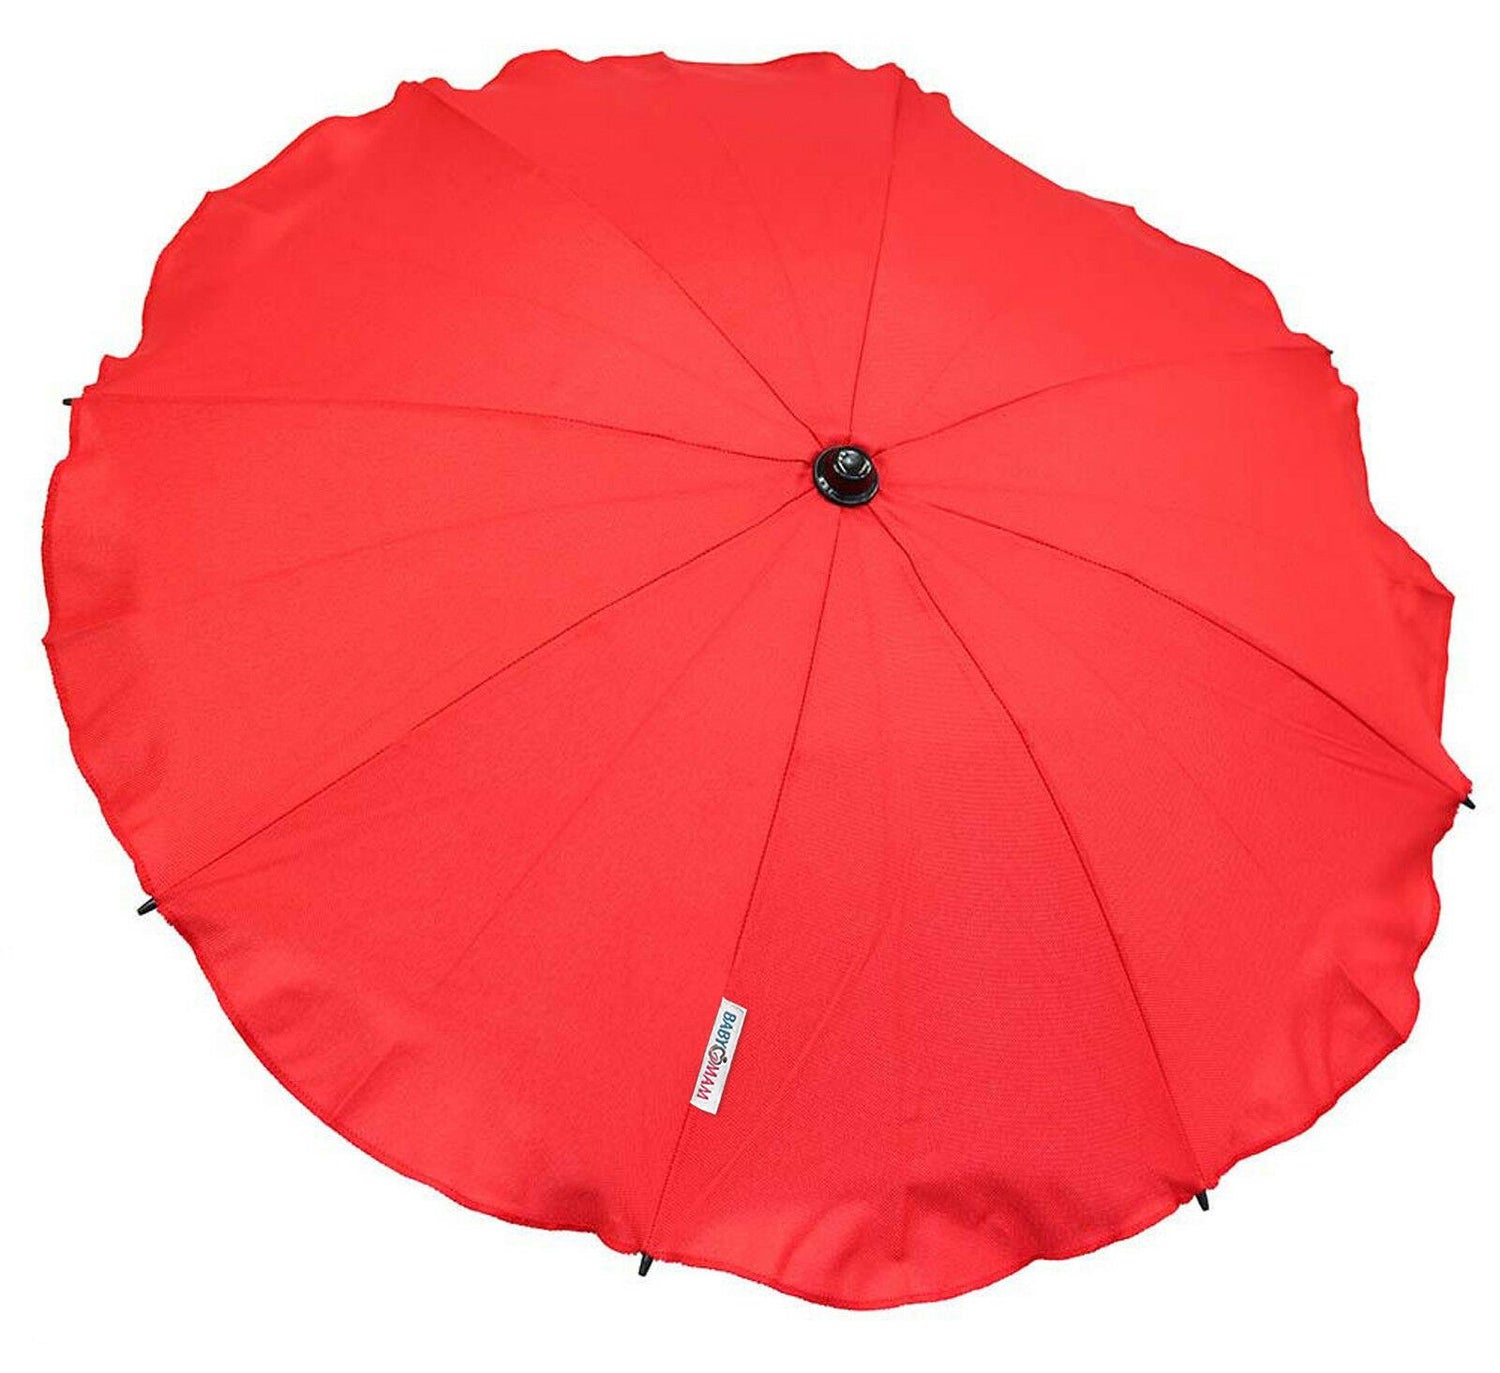 Baby Parasol Universal Sun Umbrella Pram Stroller Canopy Protect From Sun Rain Red